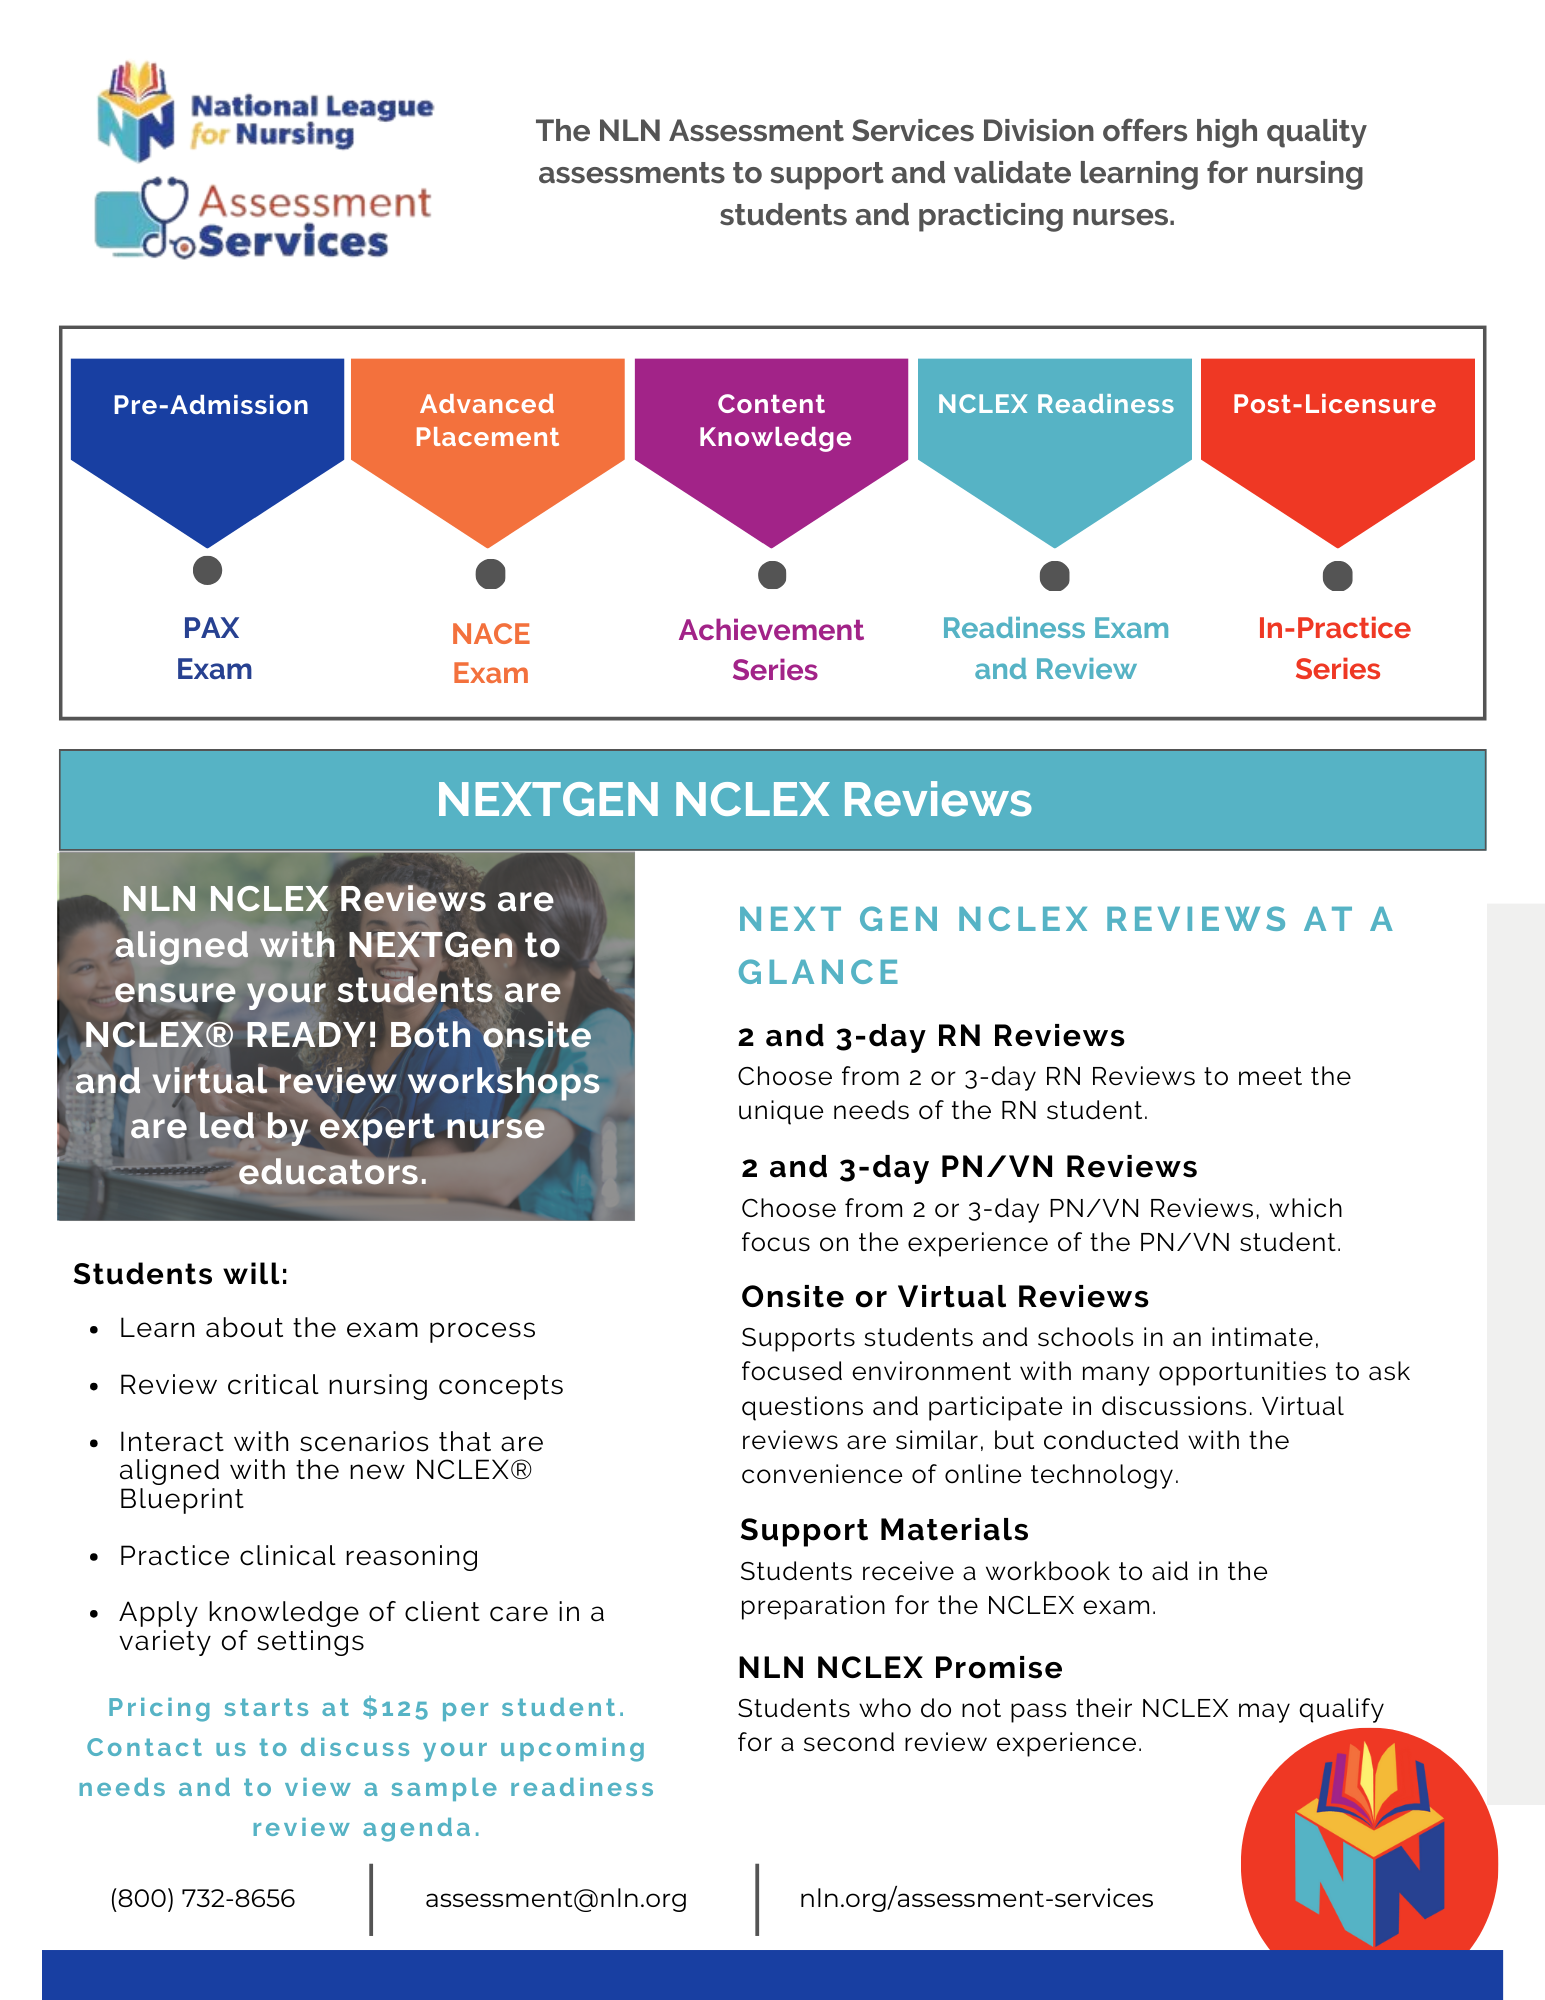 NLN ASD Product Brochure_NCLEX Reviews